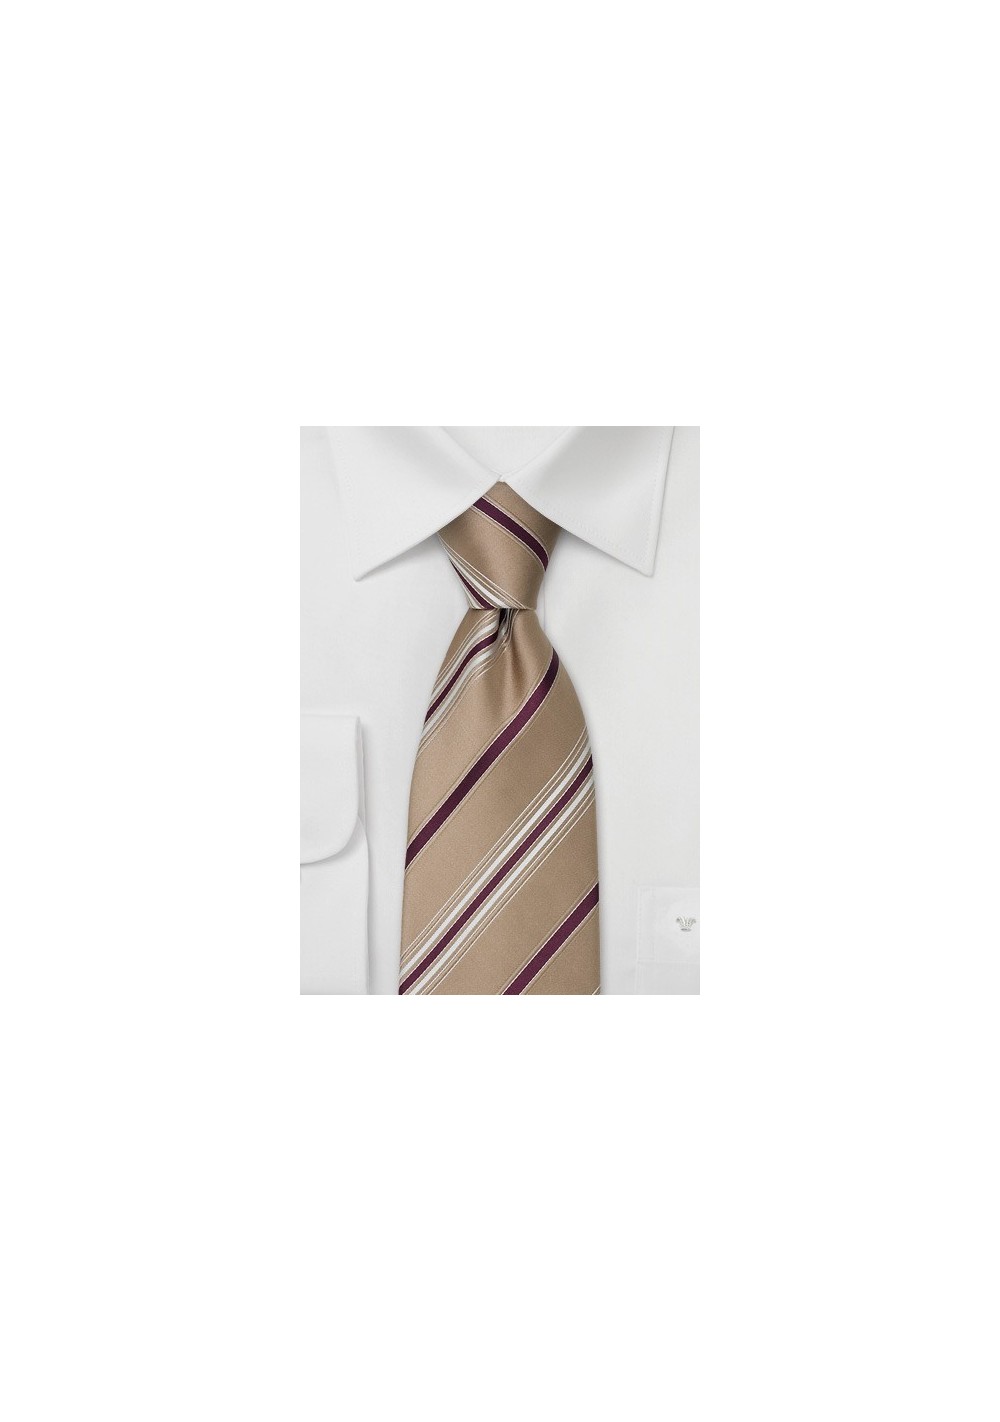 Tan & Burgundy Striped Tie in XL by Cavallieri